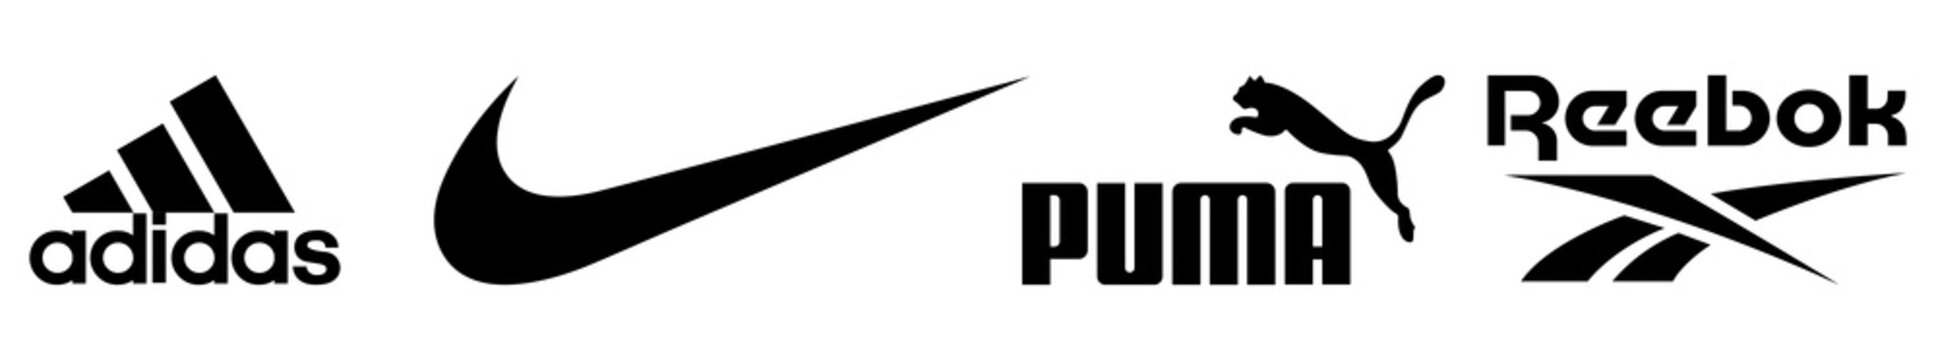 Vinnytsia, Ukraine - May 30, 2021: Set of popular sportswear manufactures logos. Adidas, Nike, Puma and Reebok logos. Editorial vector